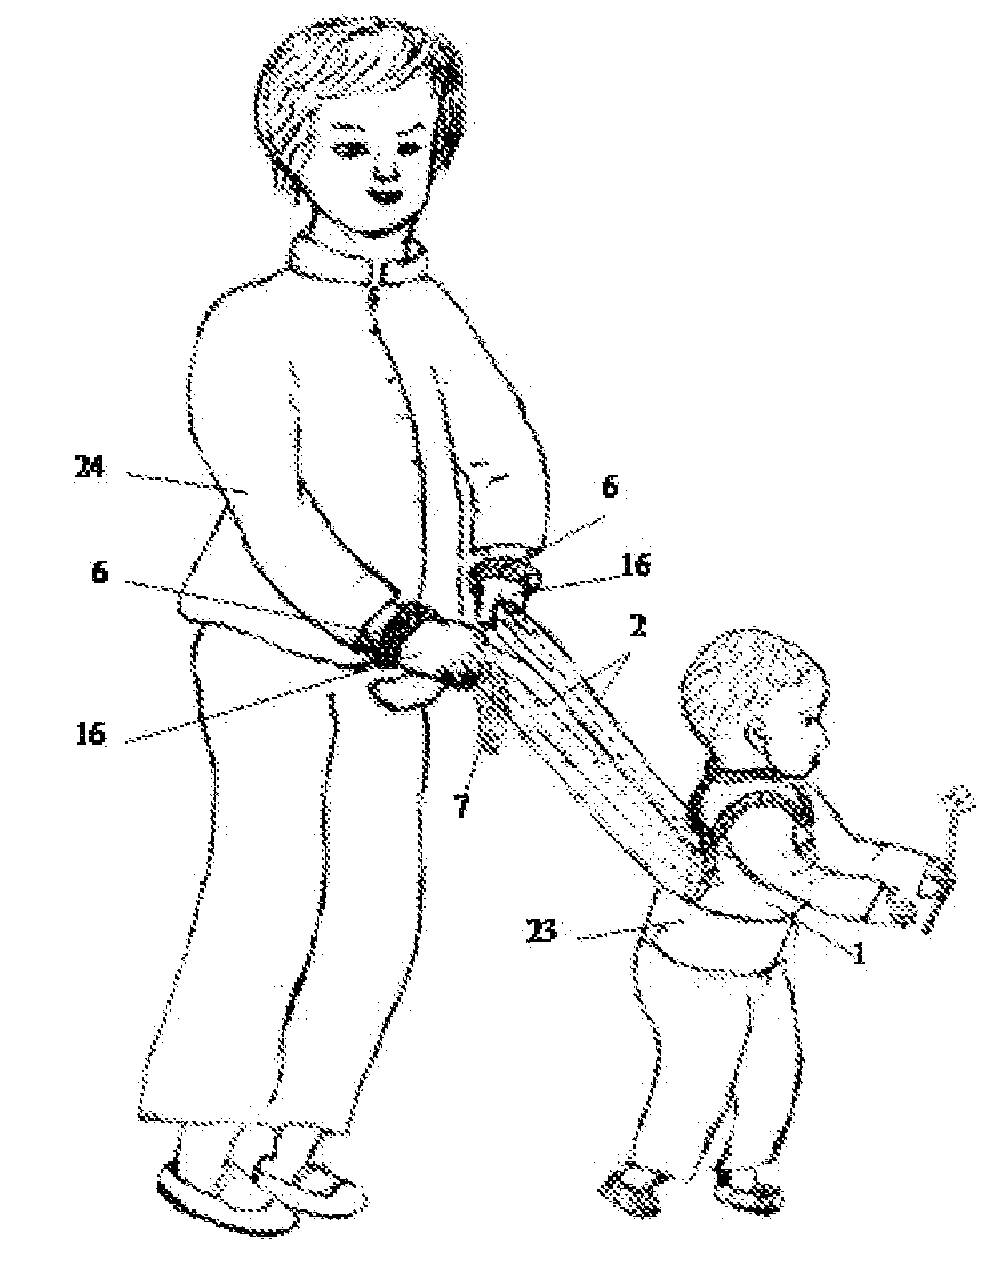 Baby walker/walking safety belt apparatus